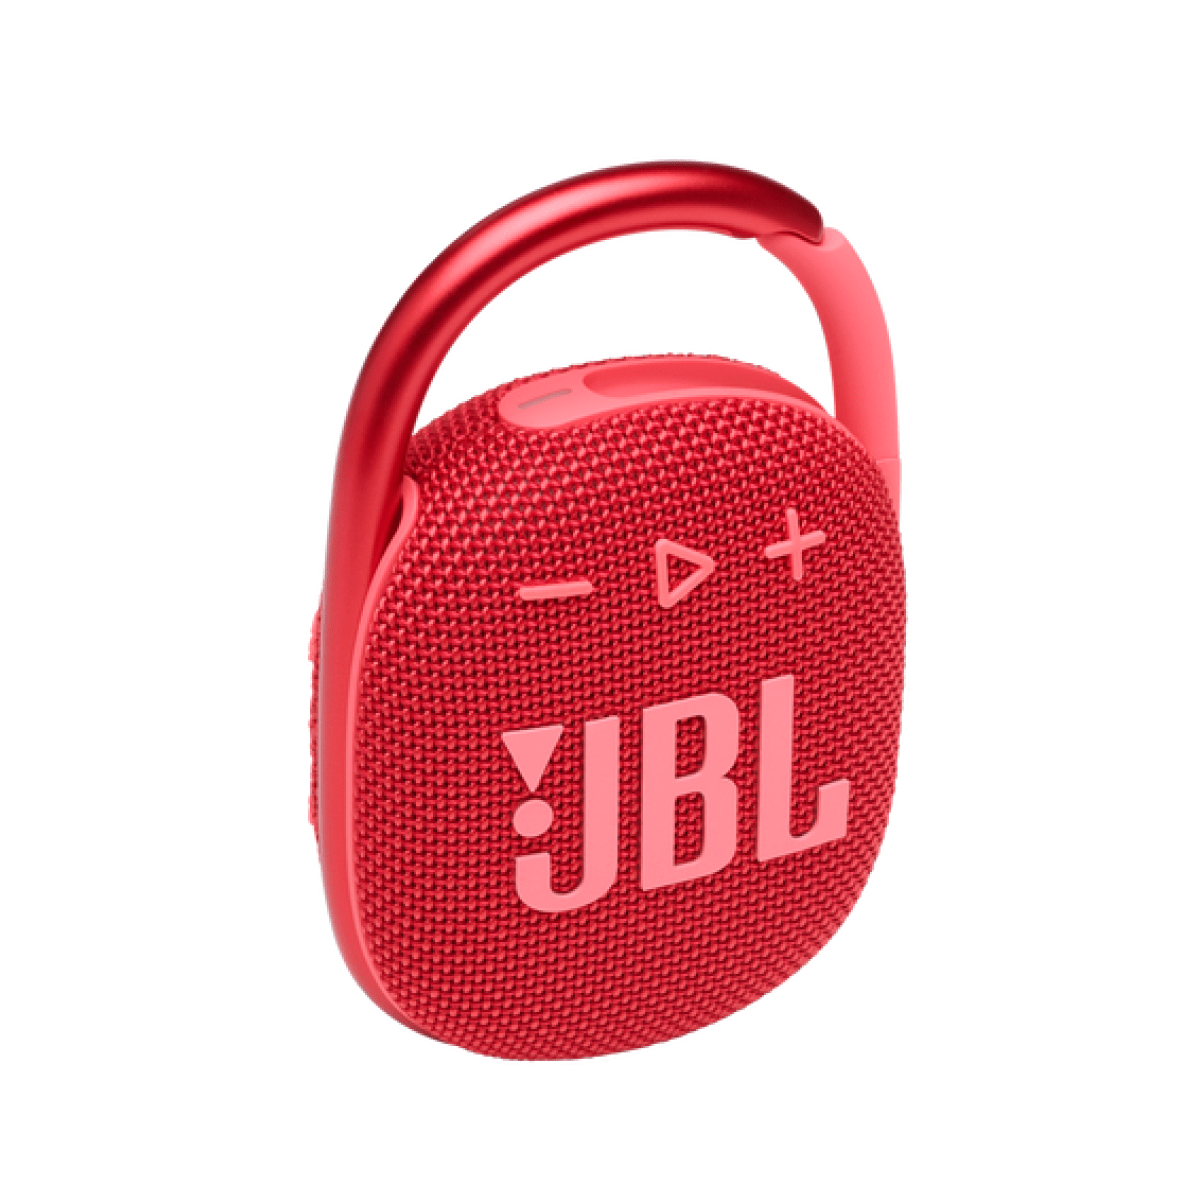 Parlante JBL Clip 4 5W